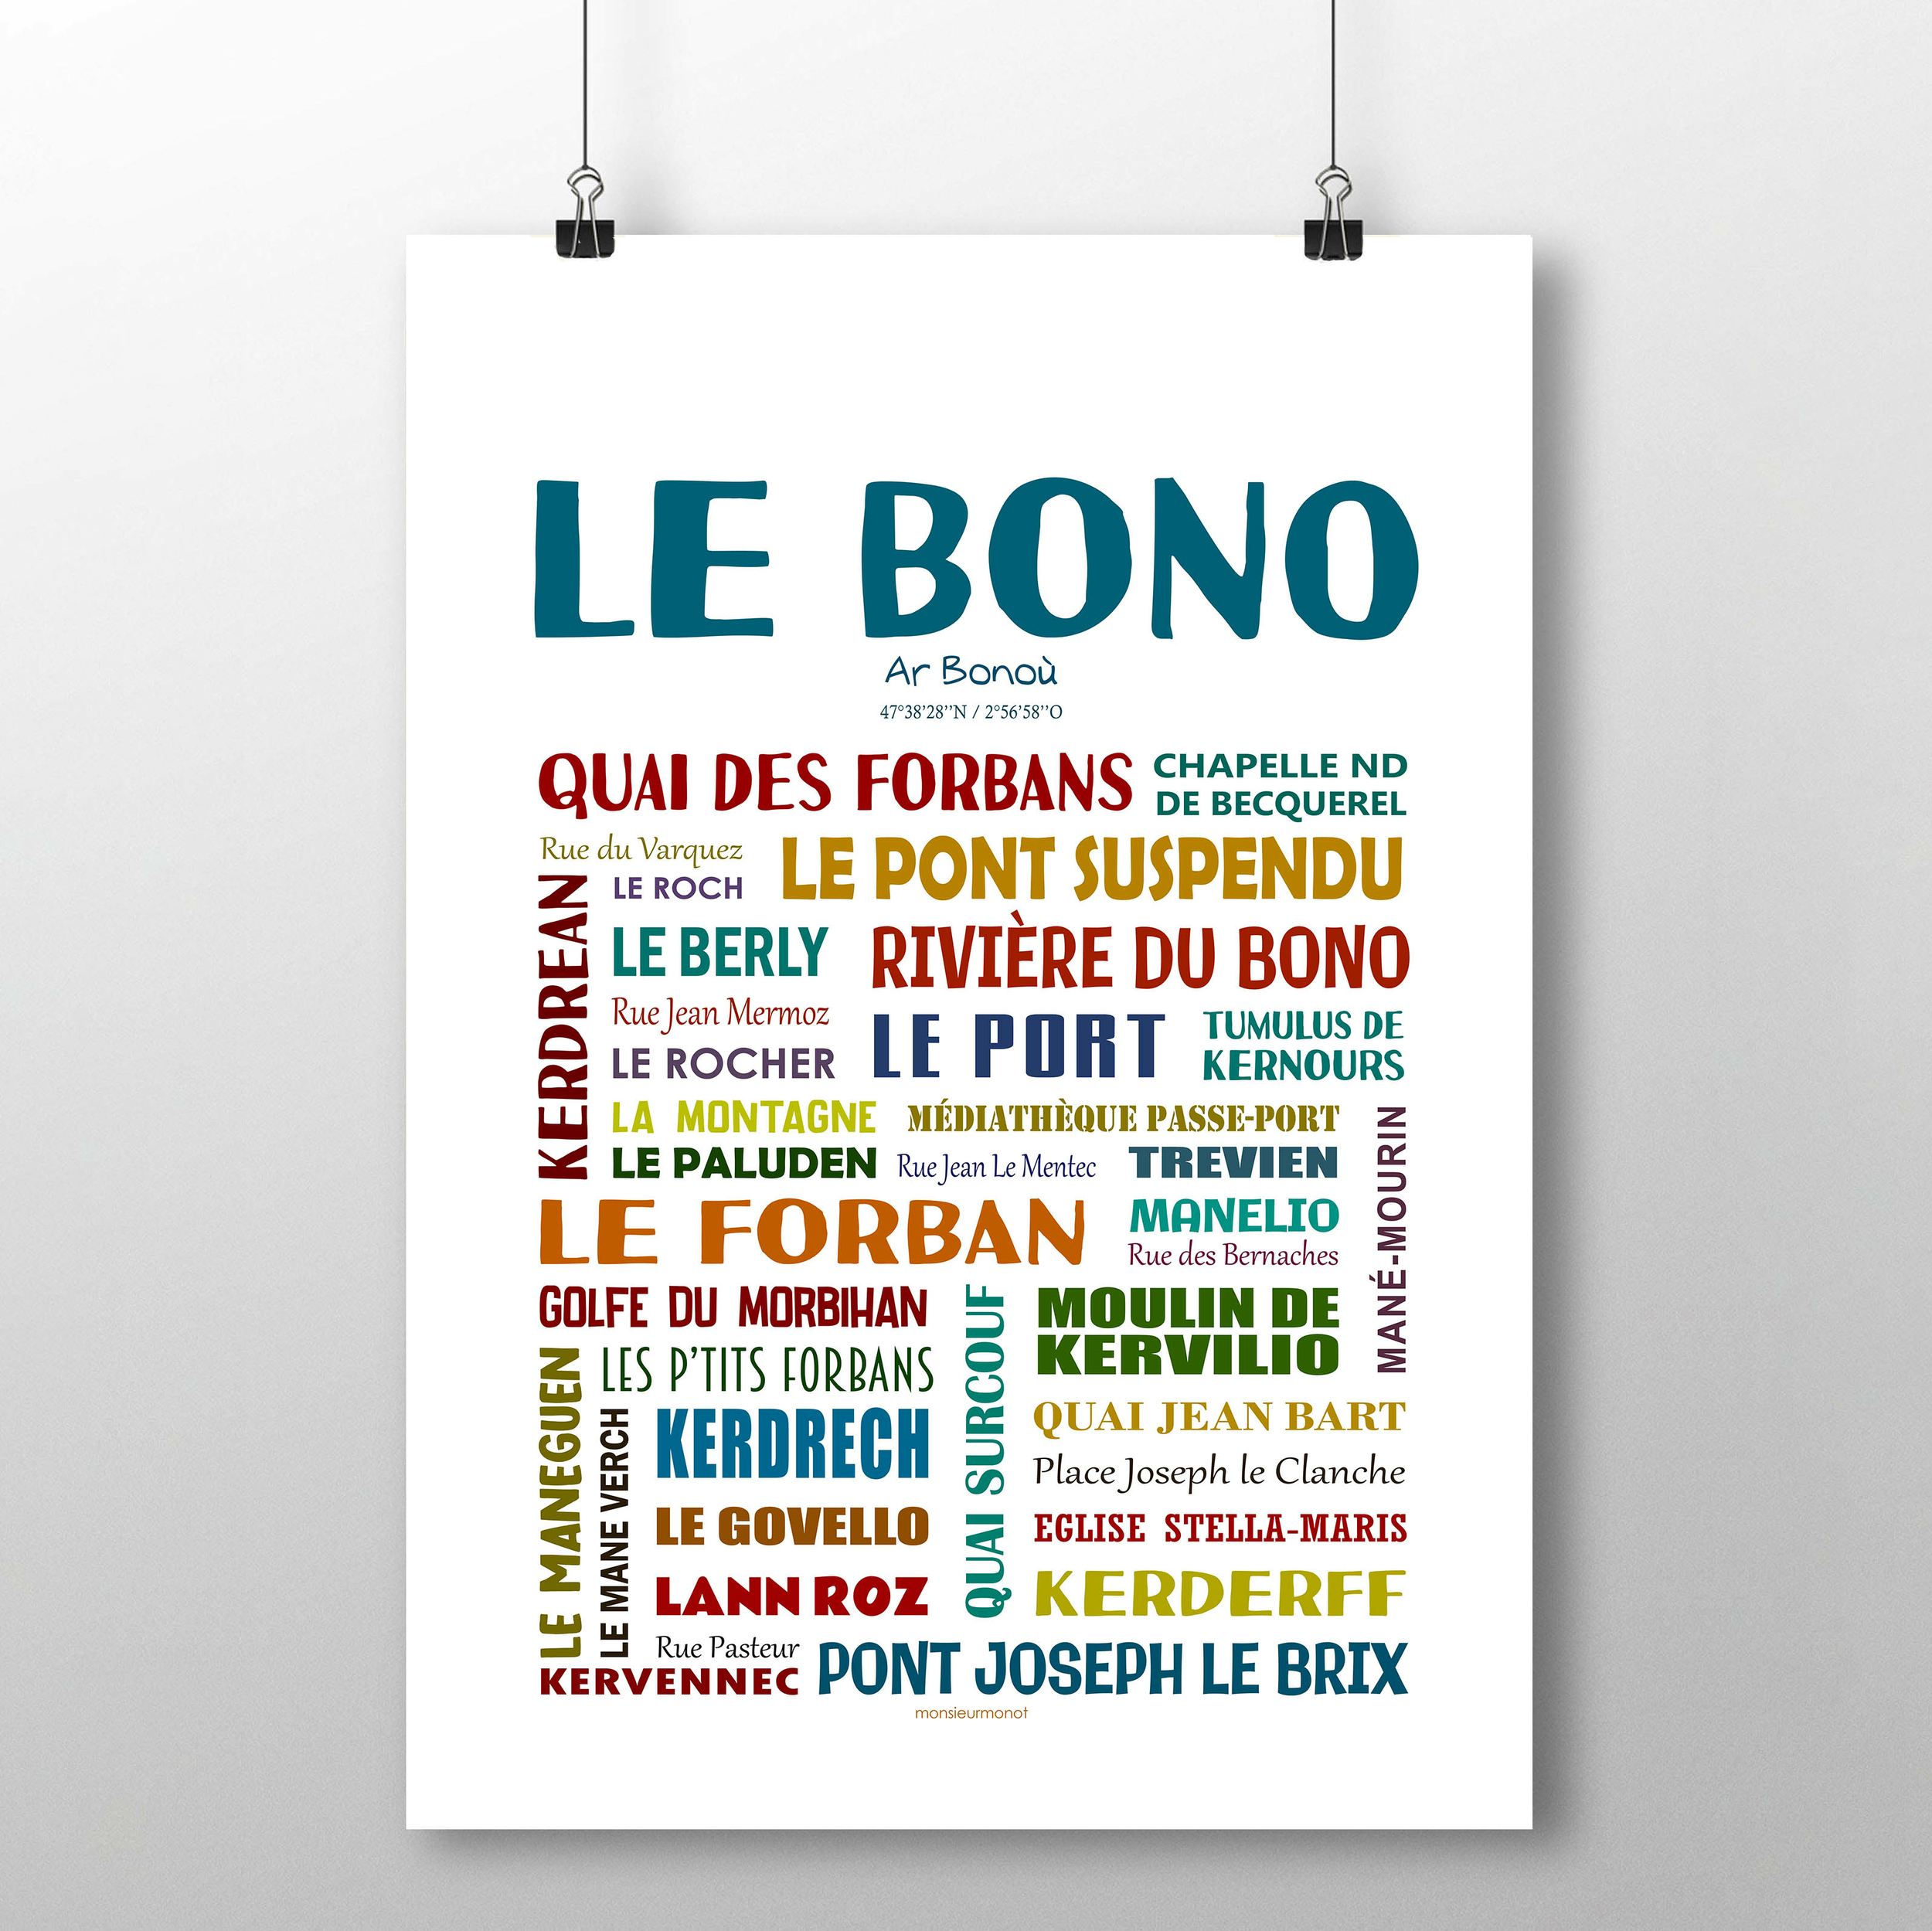 Le Bono 2